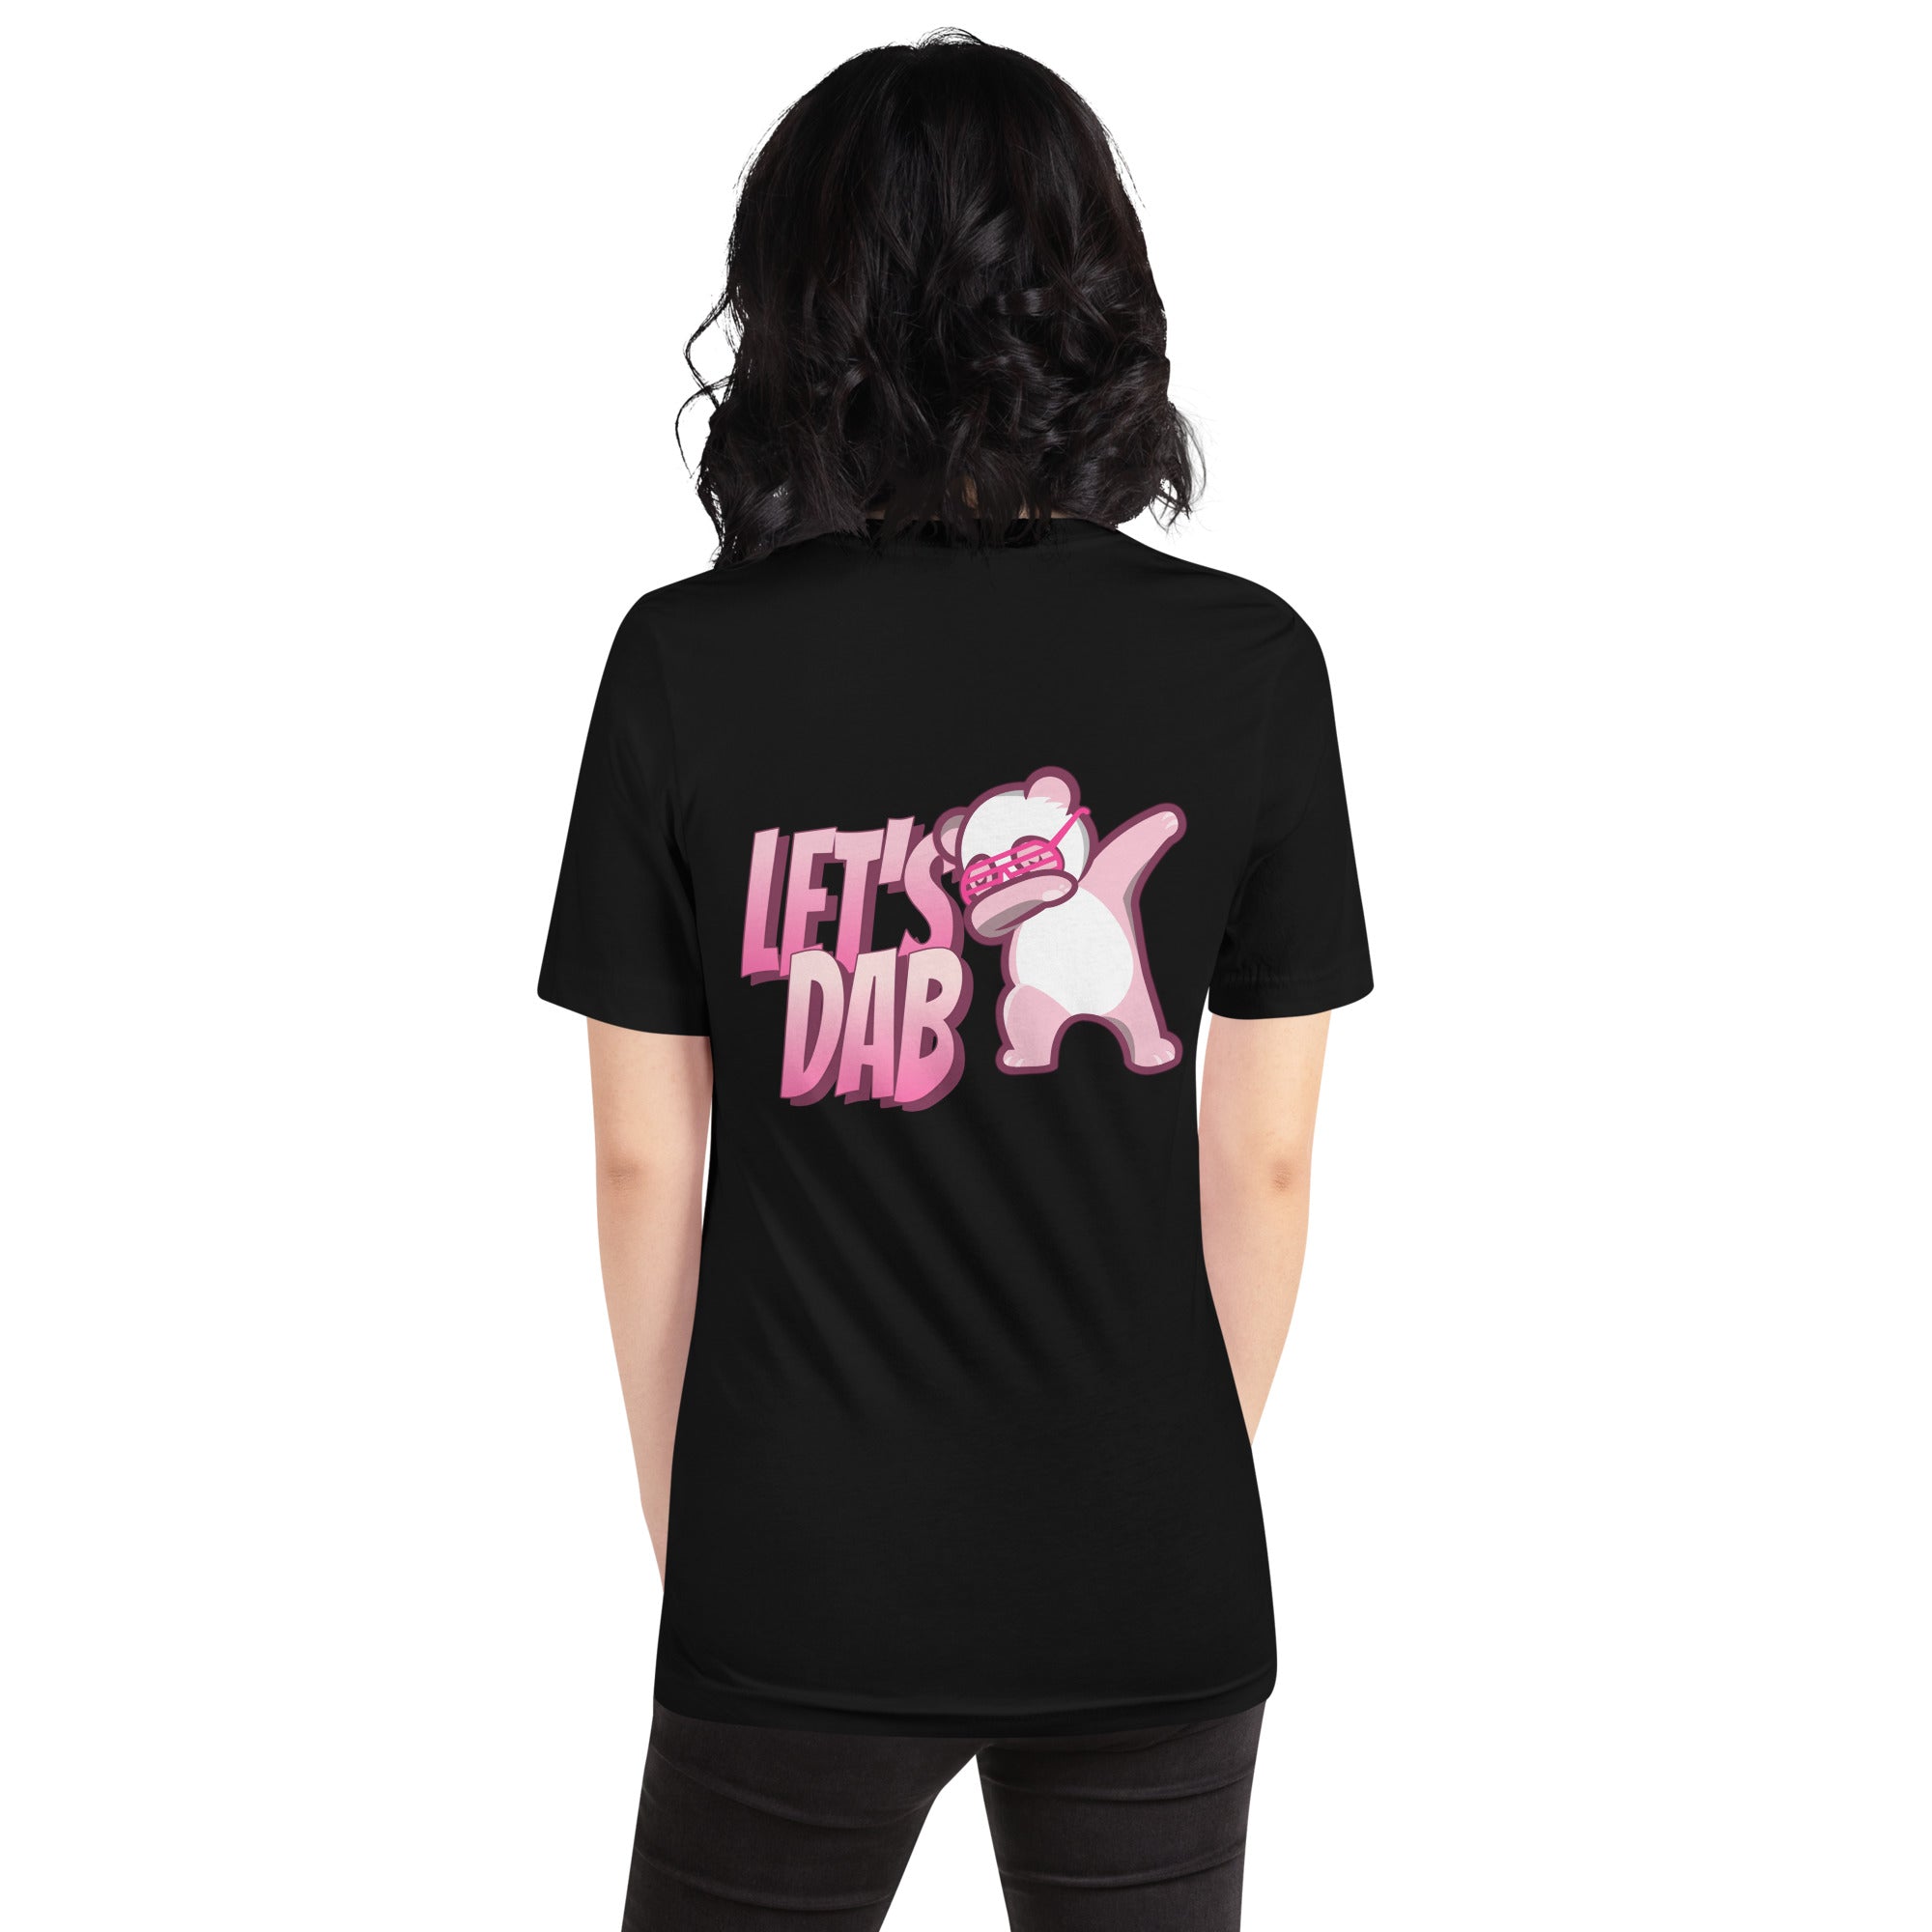 Let's dab - Unisex t-shirt (back print)